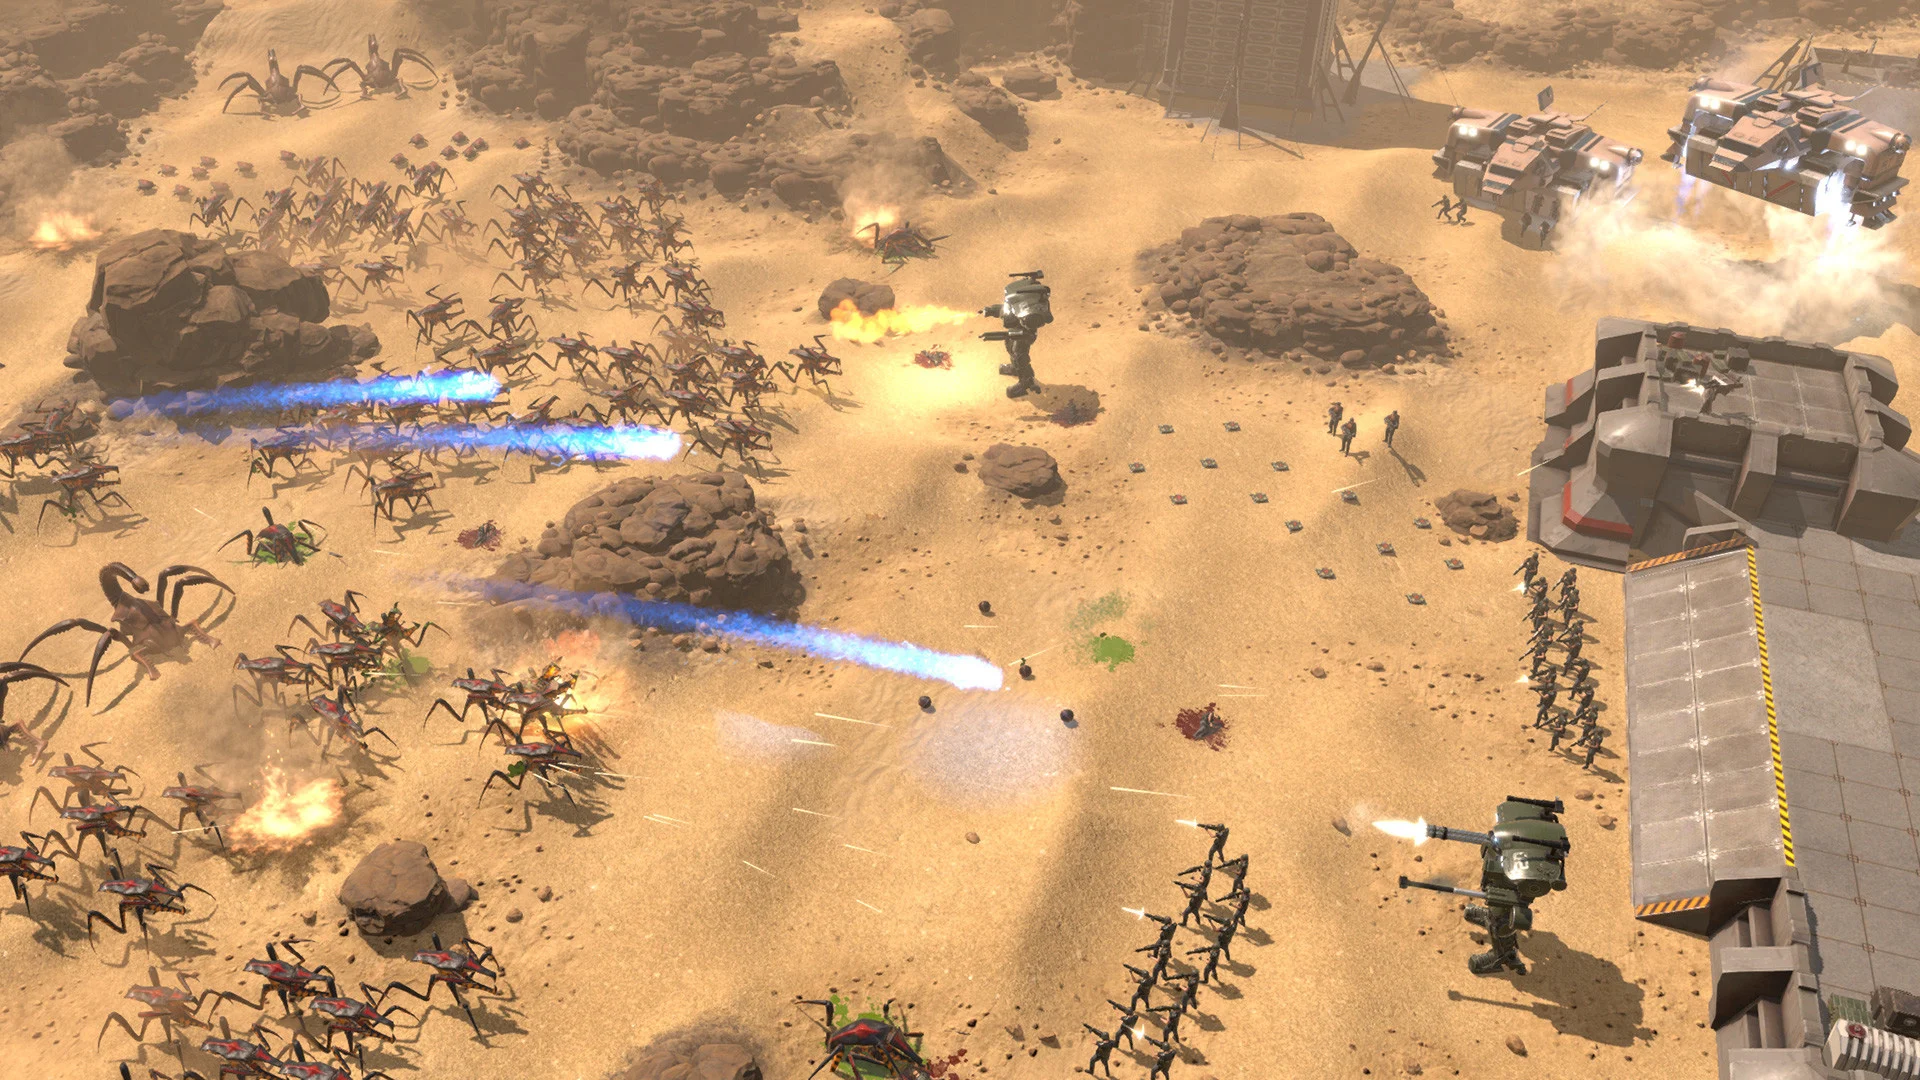 Starship Troopers - Terran Command Screenshots of Marines Fighting Bugs